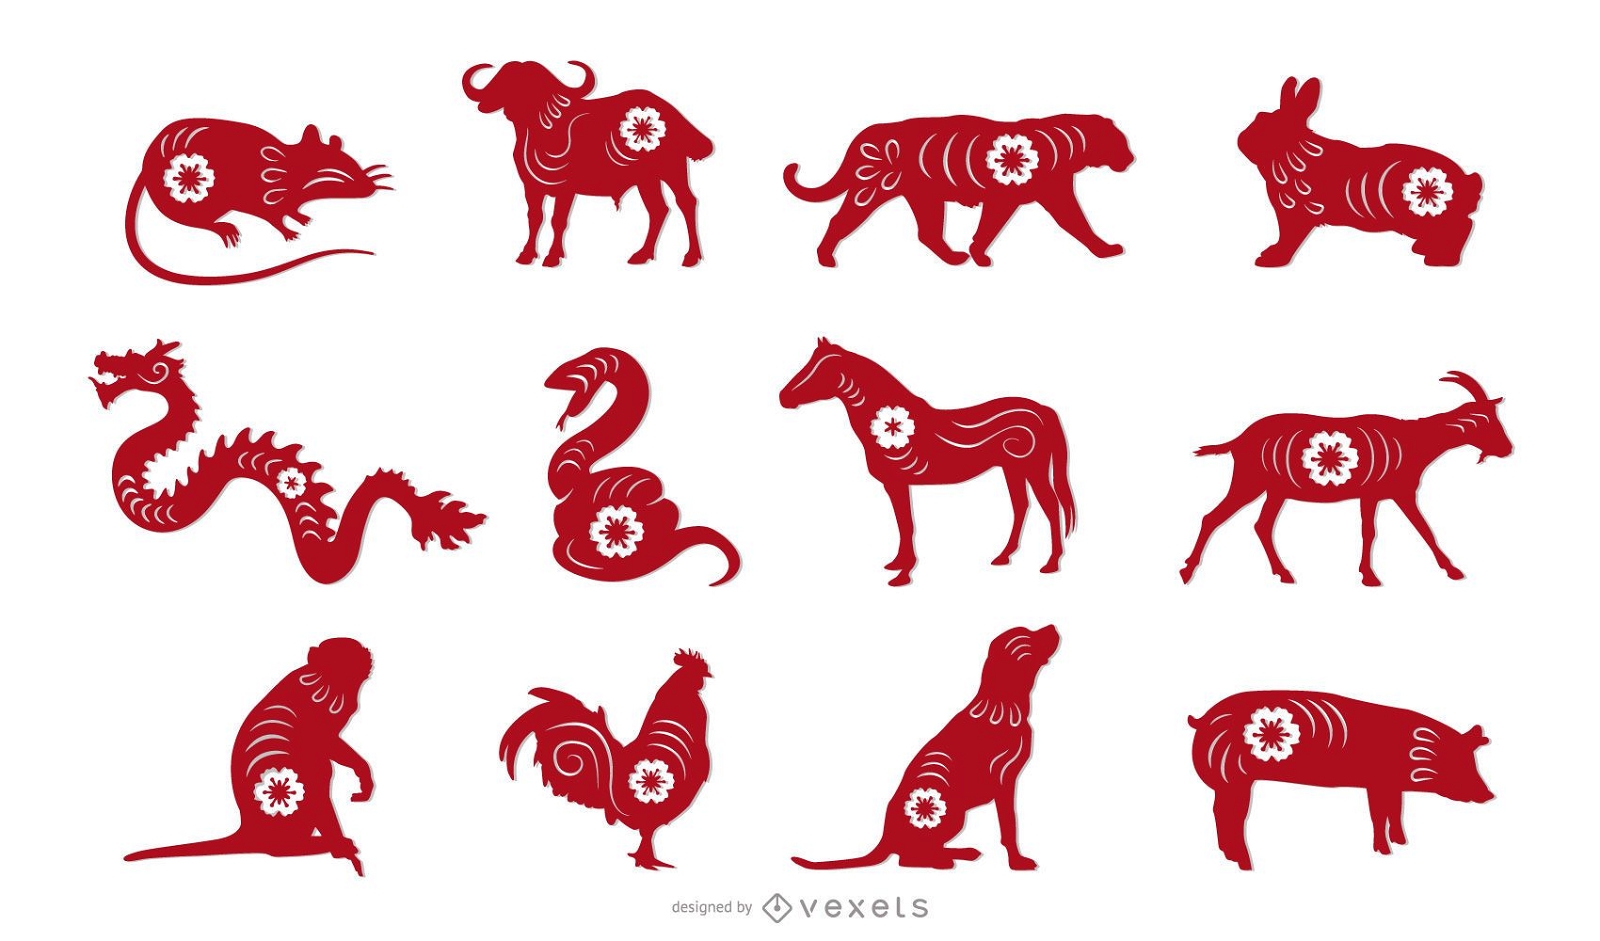 Red Astrology Chinese Zodiac Papercut - Whole Set  New year symbols,  Chinese zodiac signs, Chinese symbols